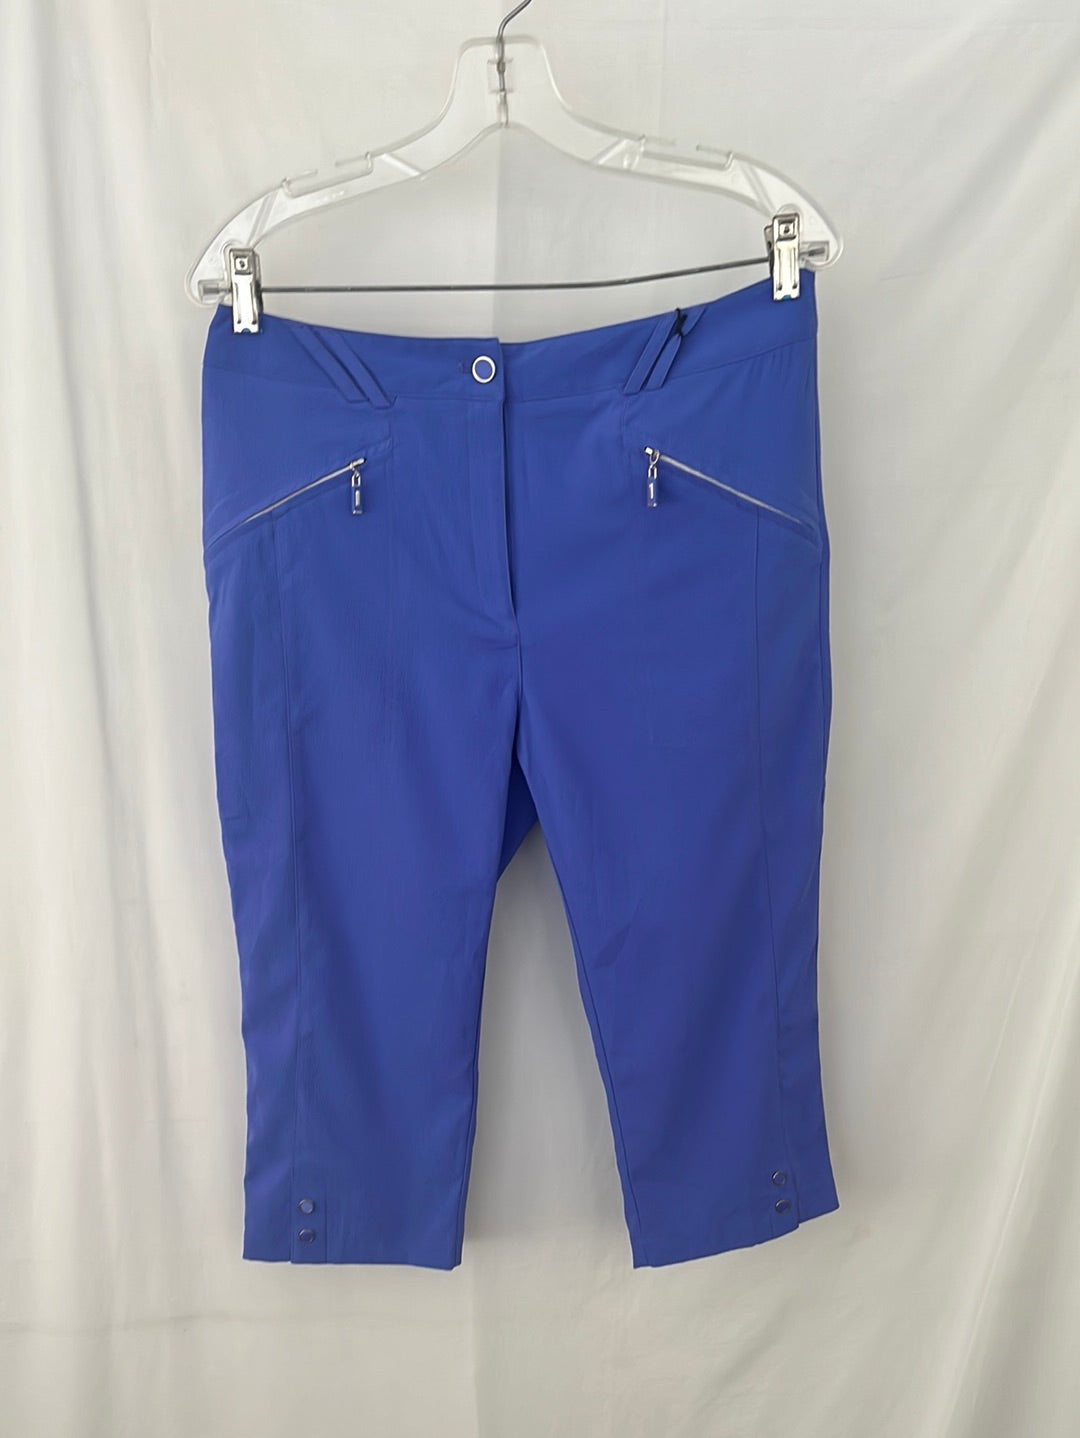 NWT -- DKNY Golf Blue Capri Pants -- 8